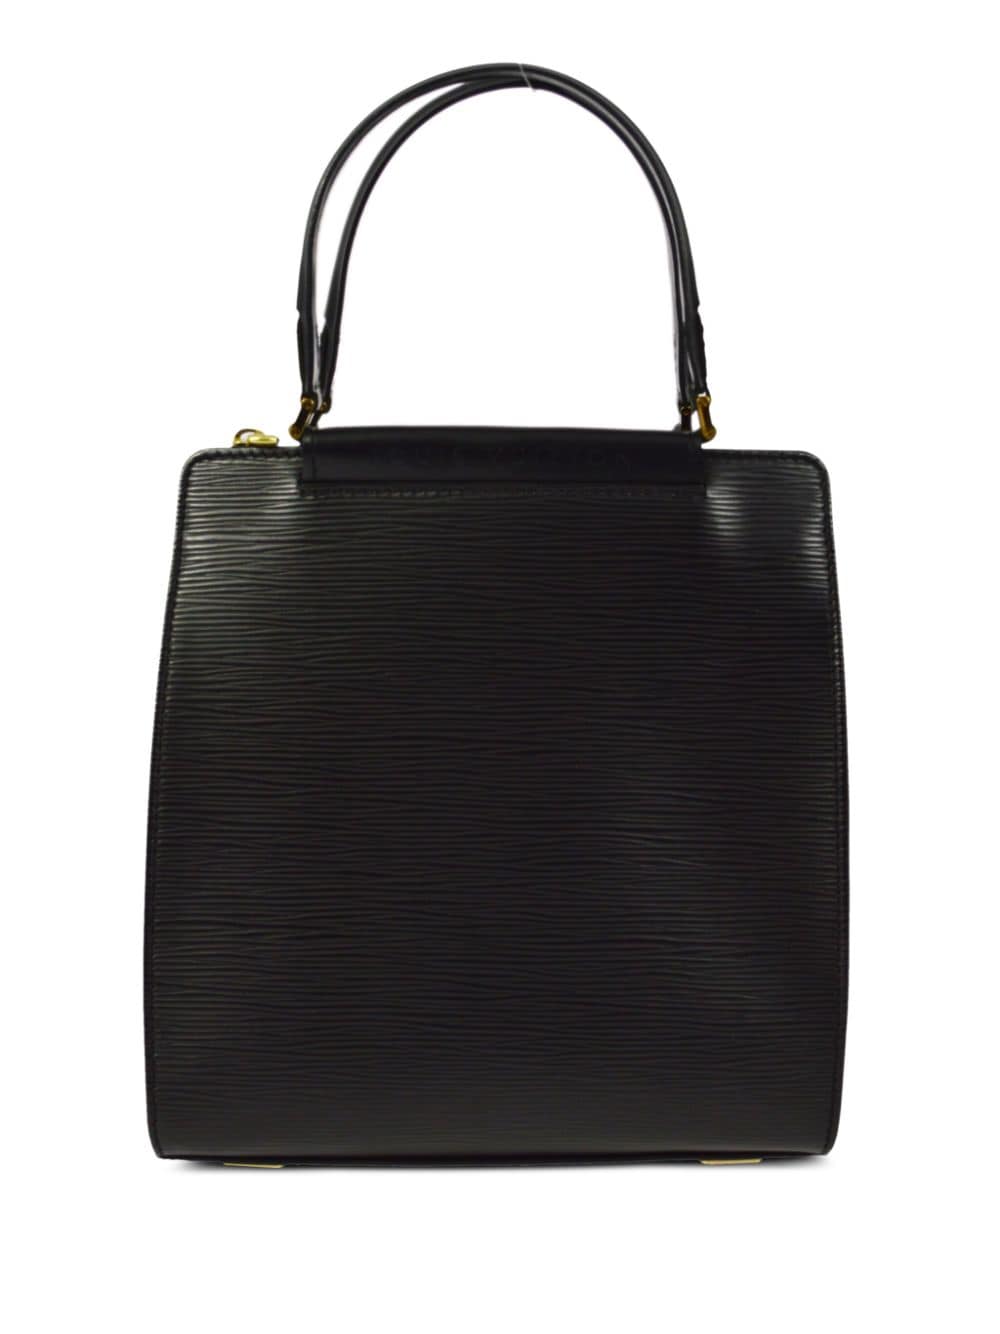 Pre-owned Louis Vuitton 2003 Figari Pm Handbag In 黑色